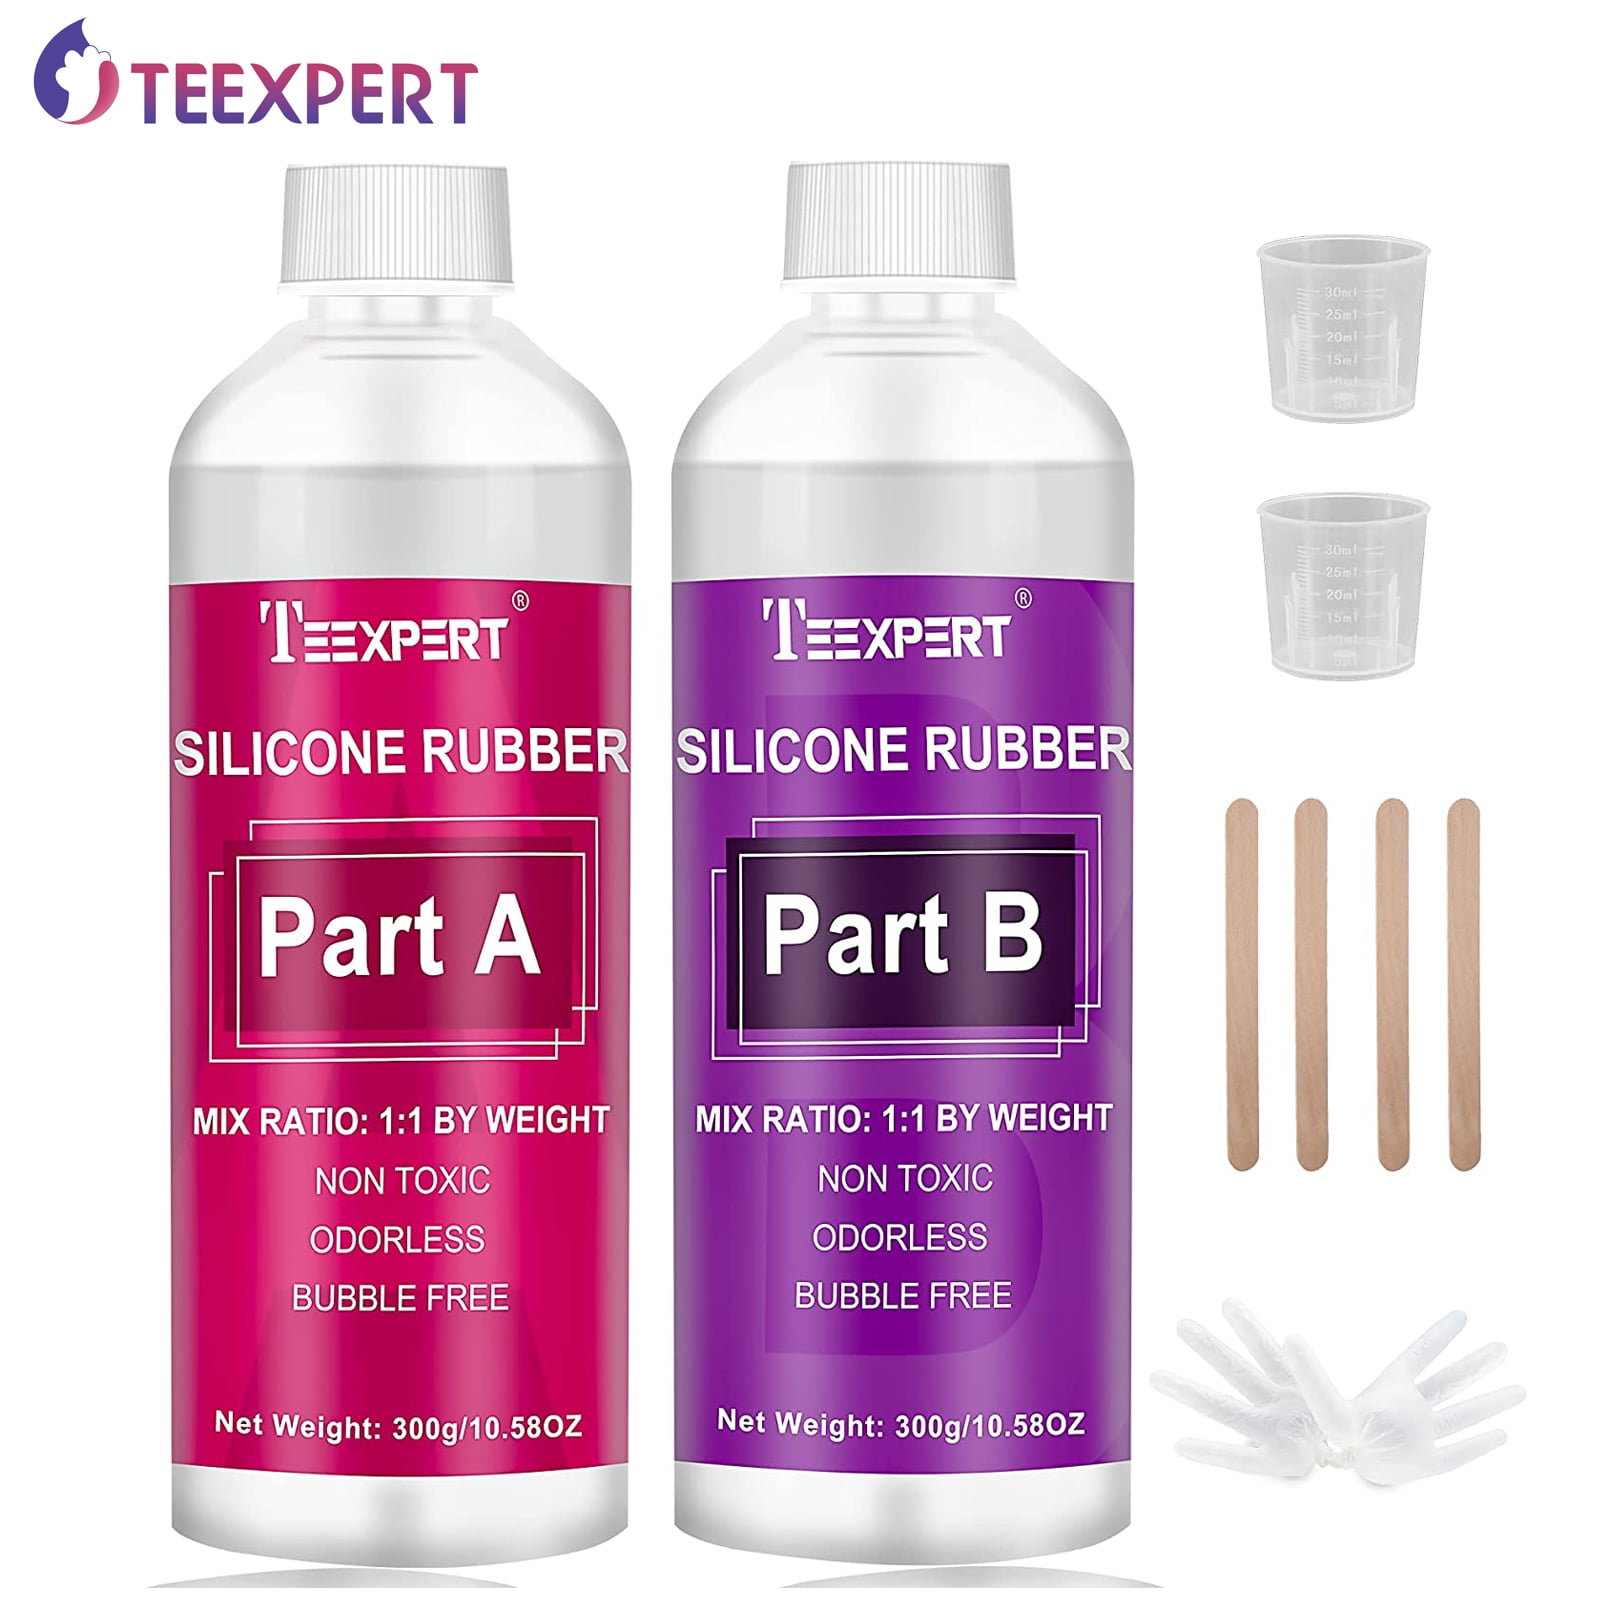 Teexpert Silicone Mold Maker, Liquid Translucent Silicone Rubber